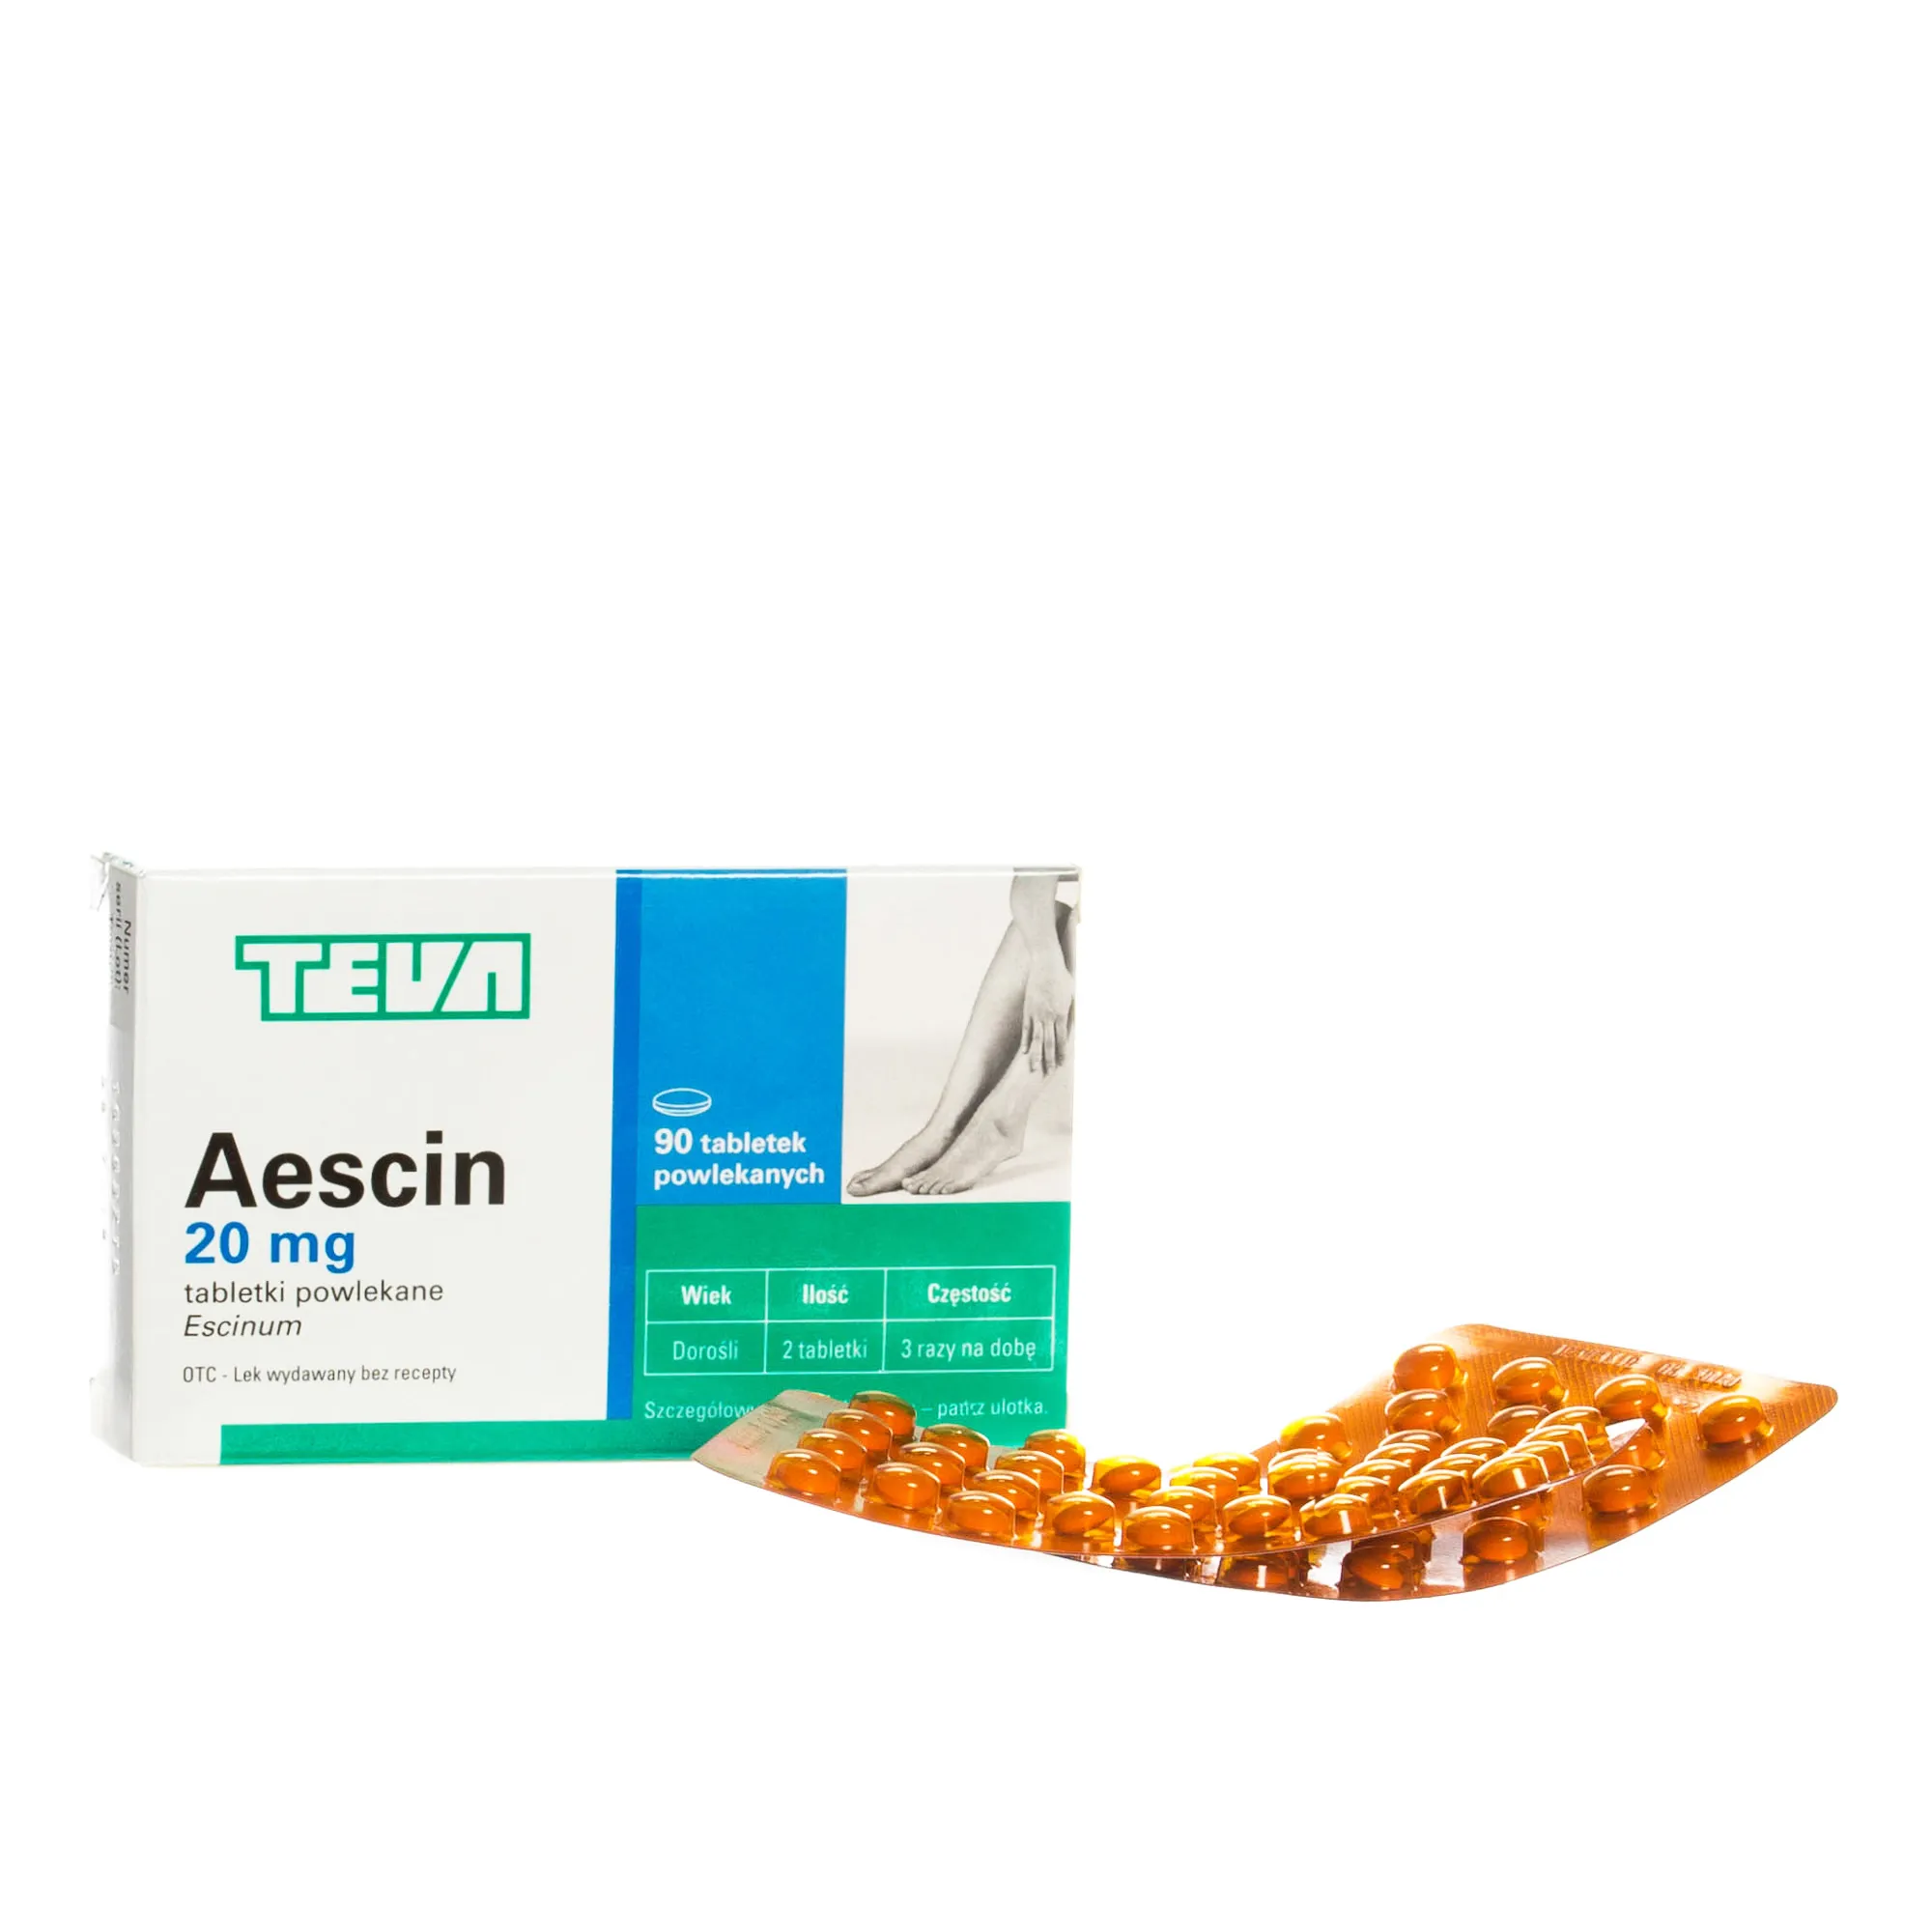 Aescin 20 mg, Escinum, 90 tabletek powlekanych